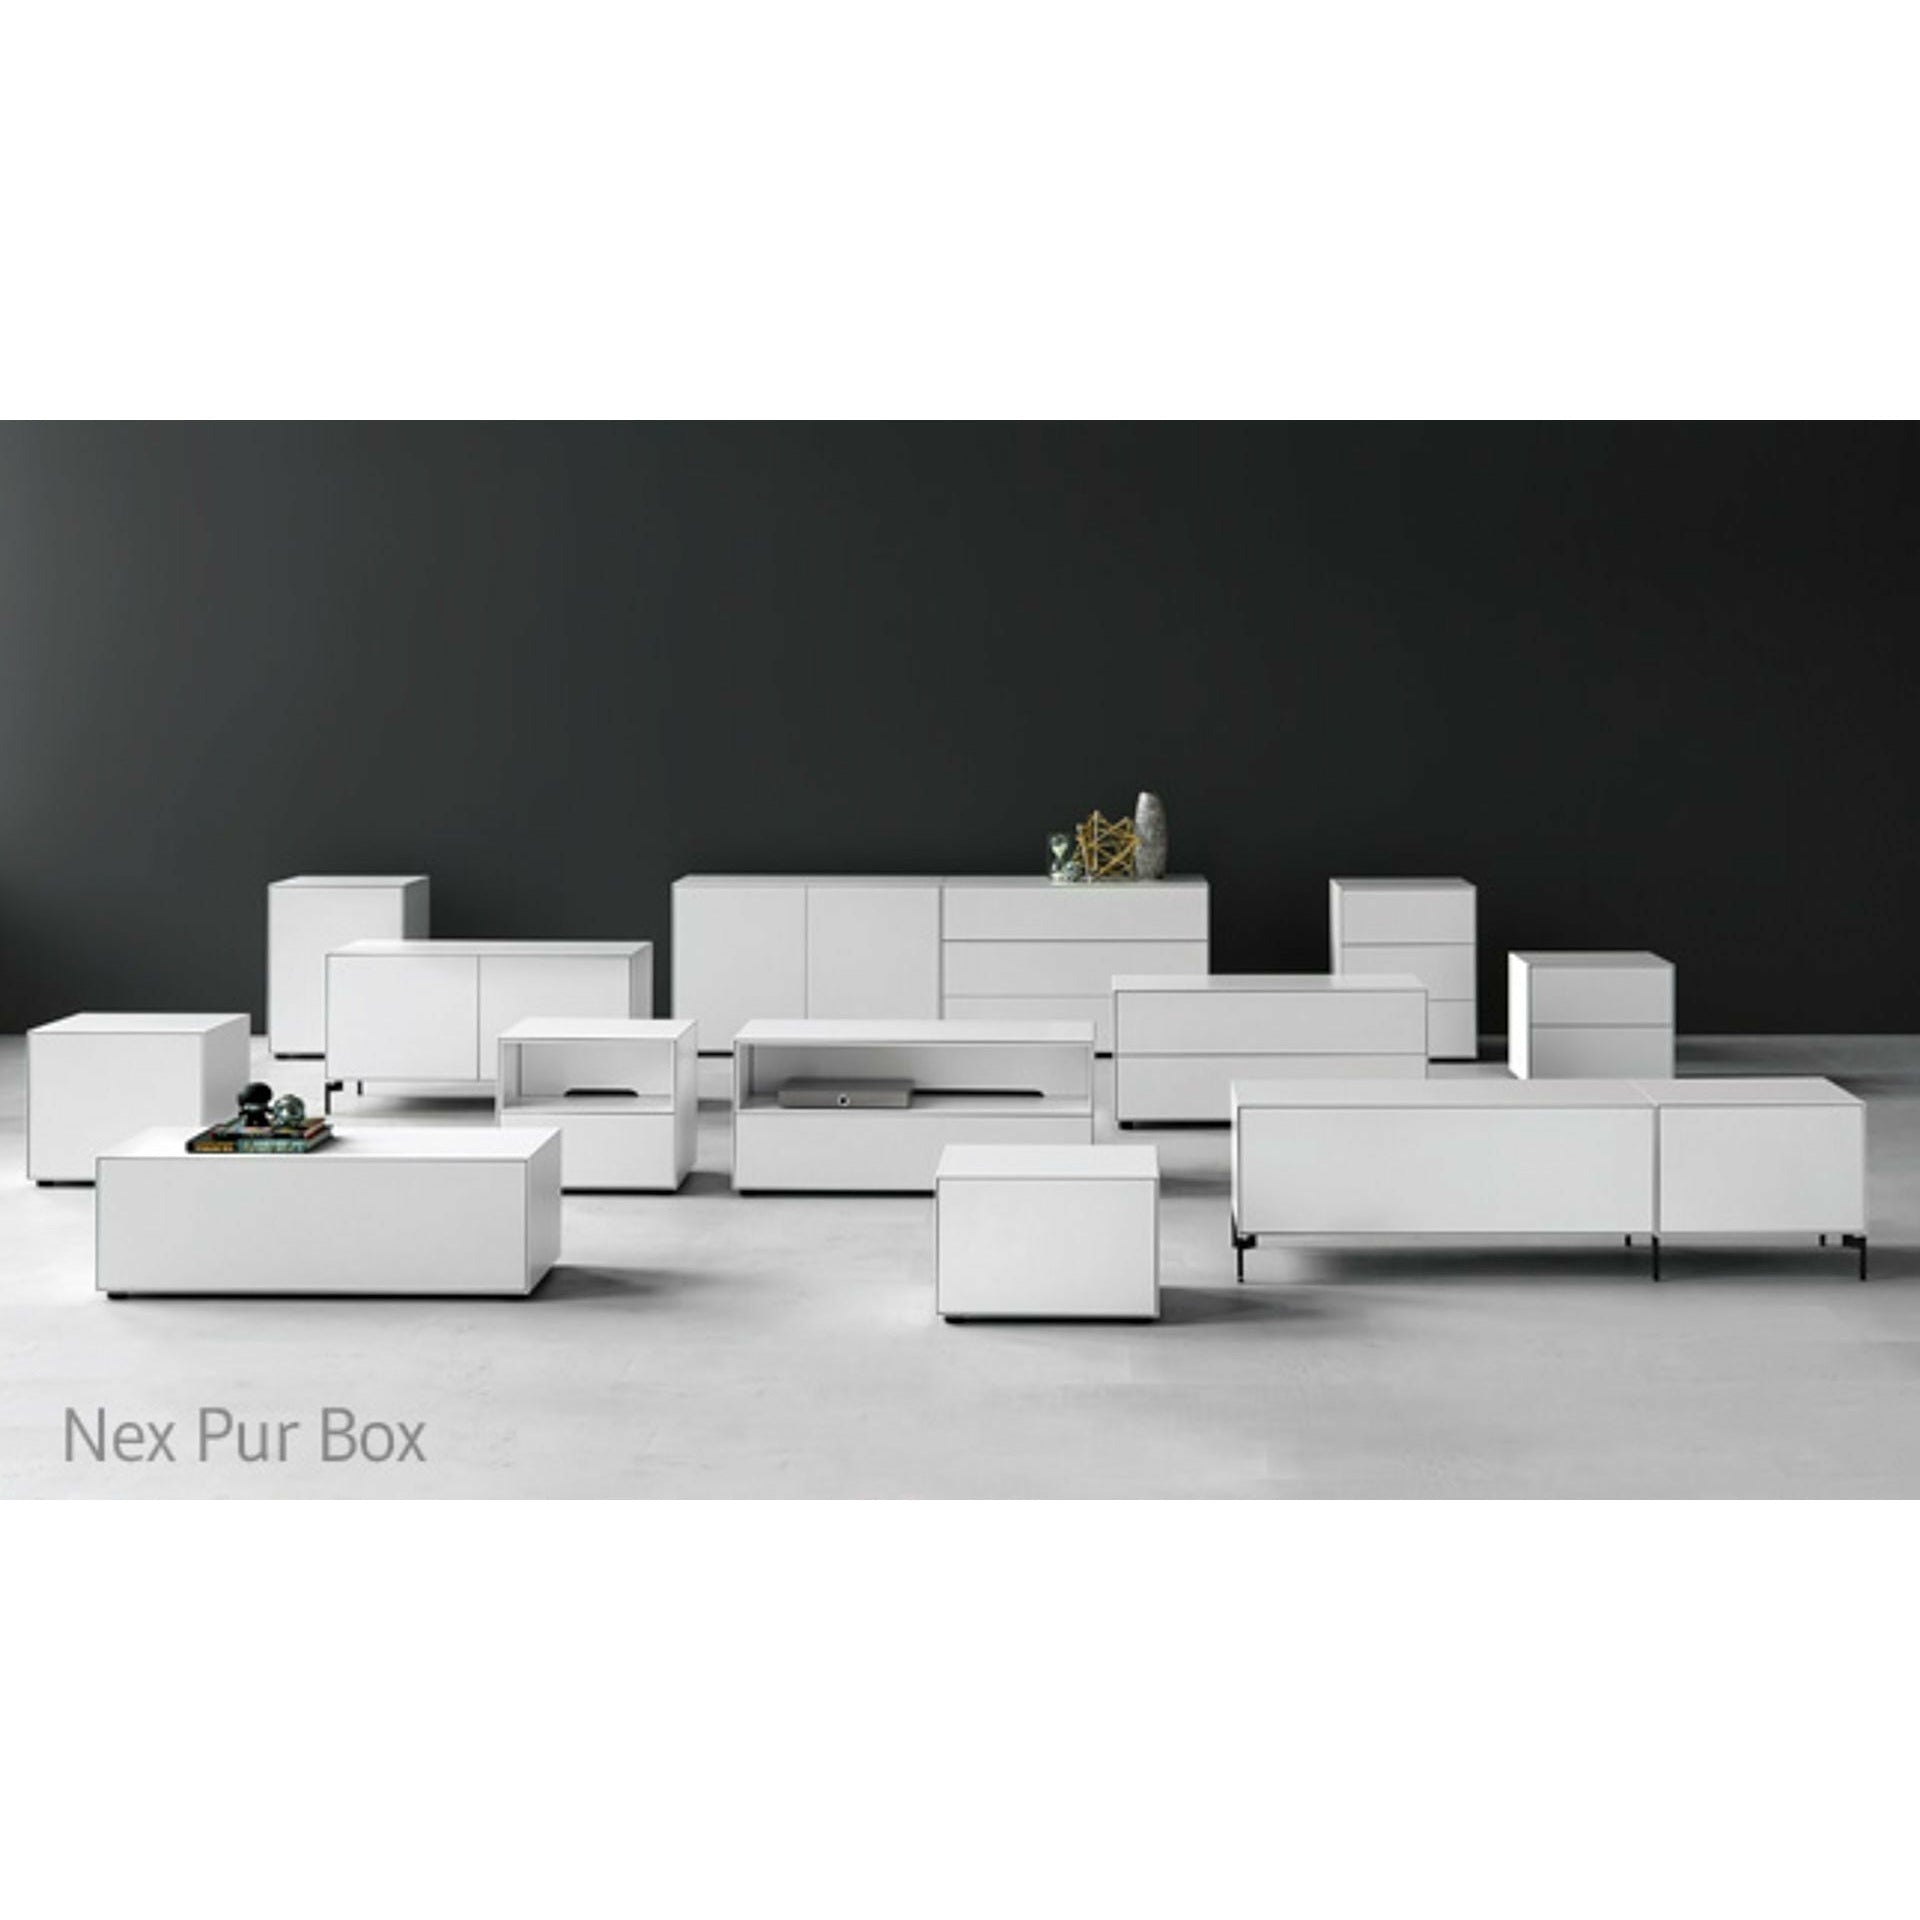 Piure Nex pur box lade/deur hx w 50x180 cm, 2 planken/1 plank